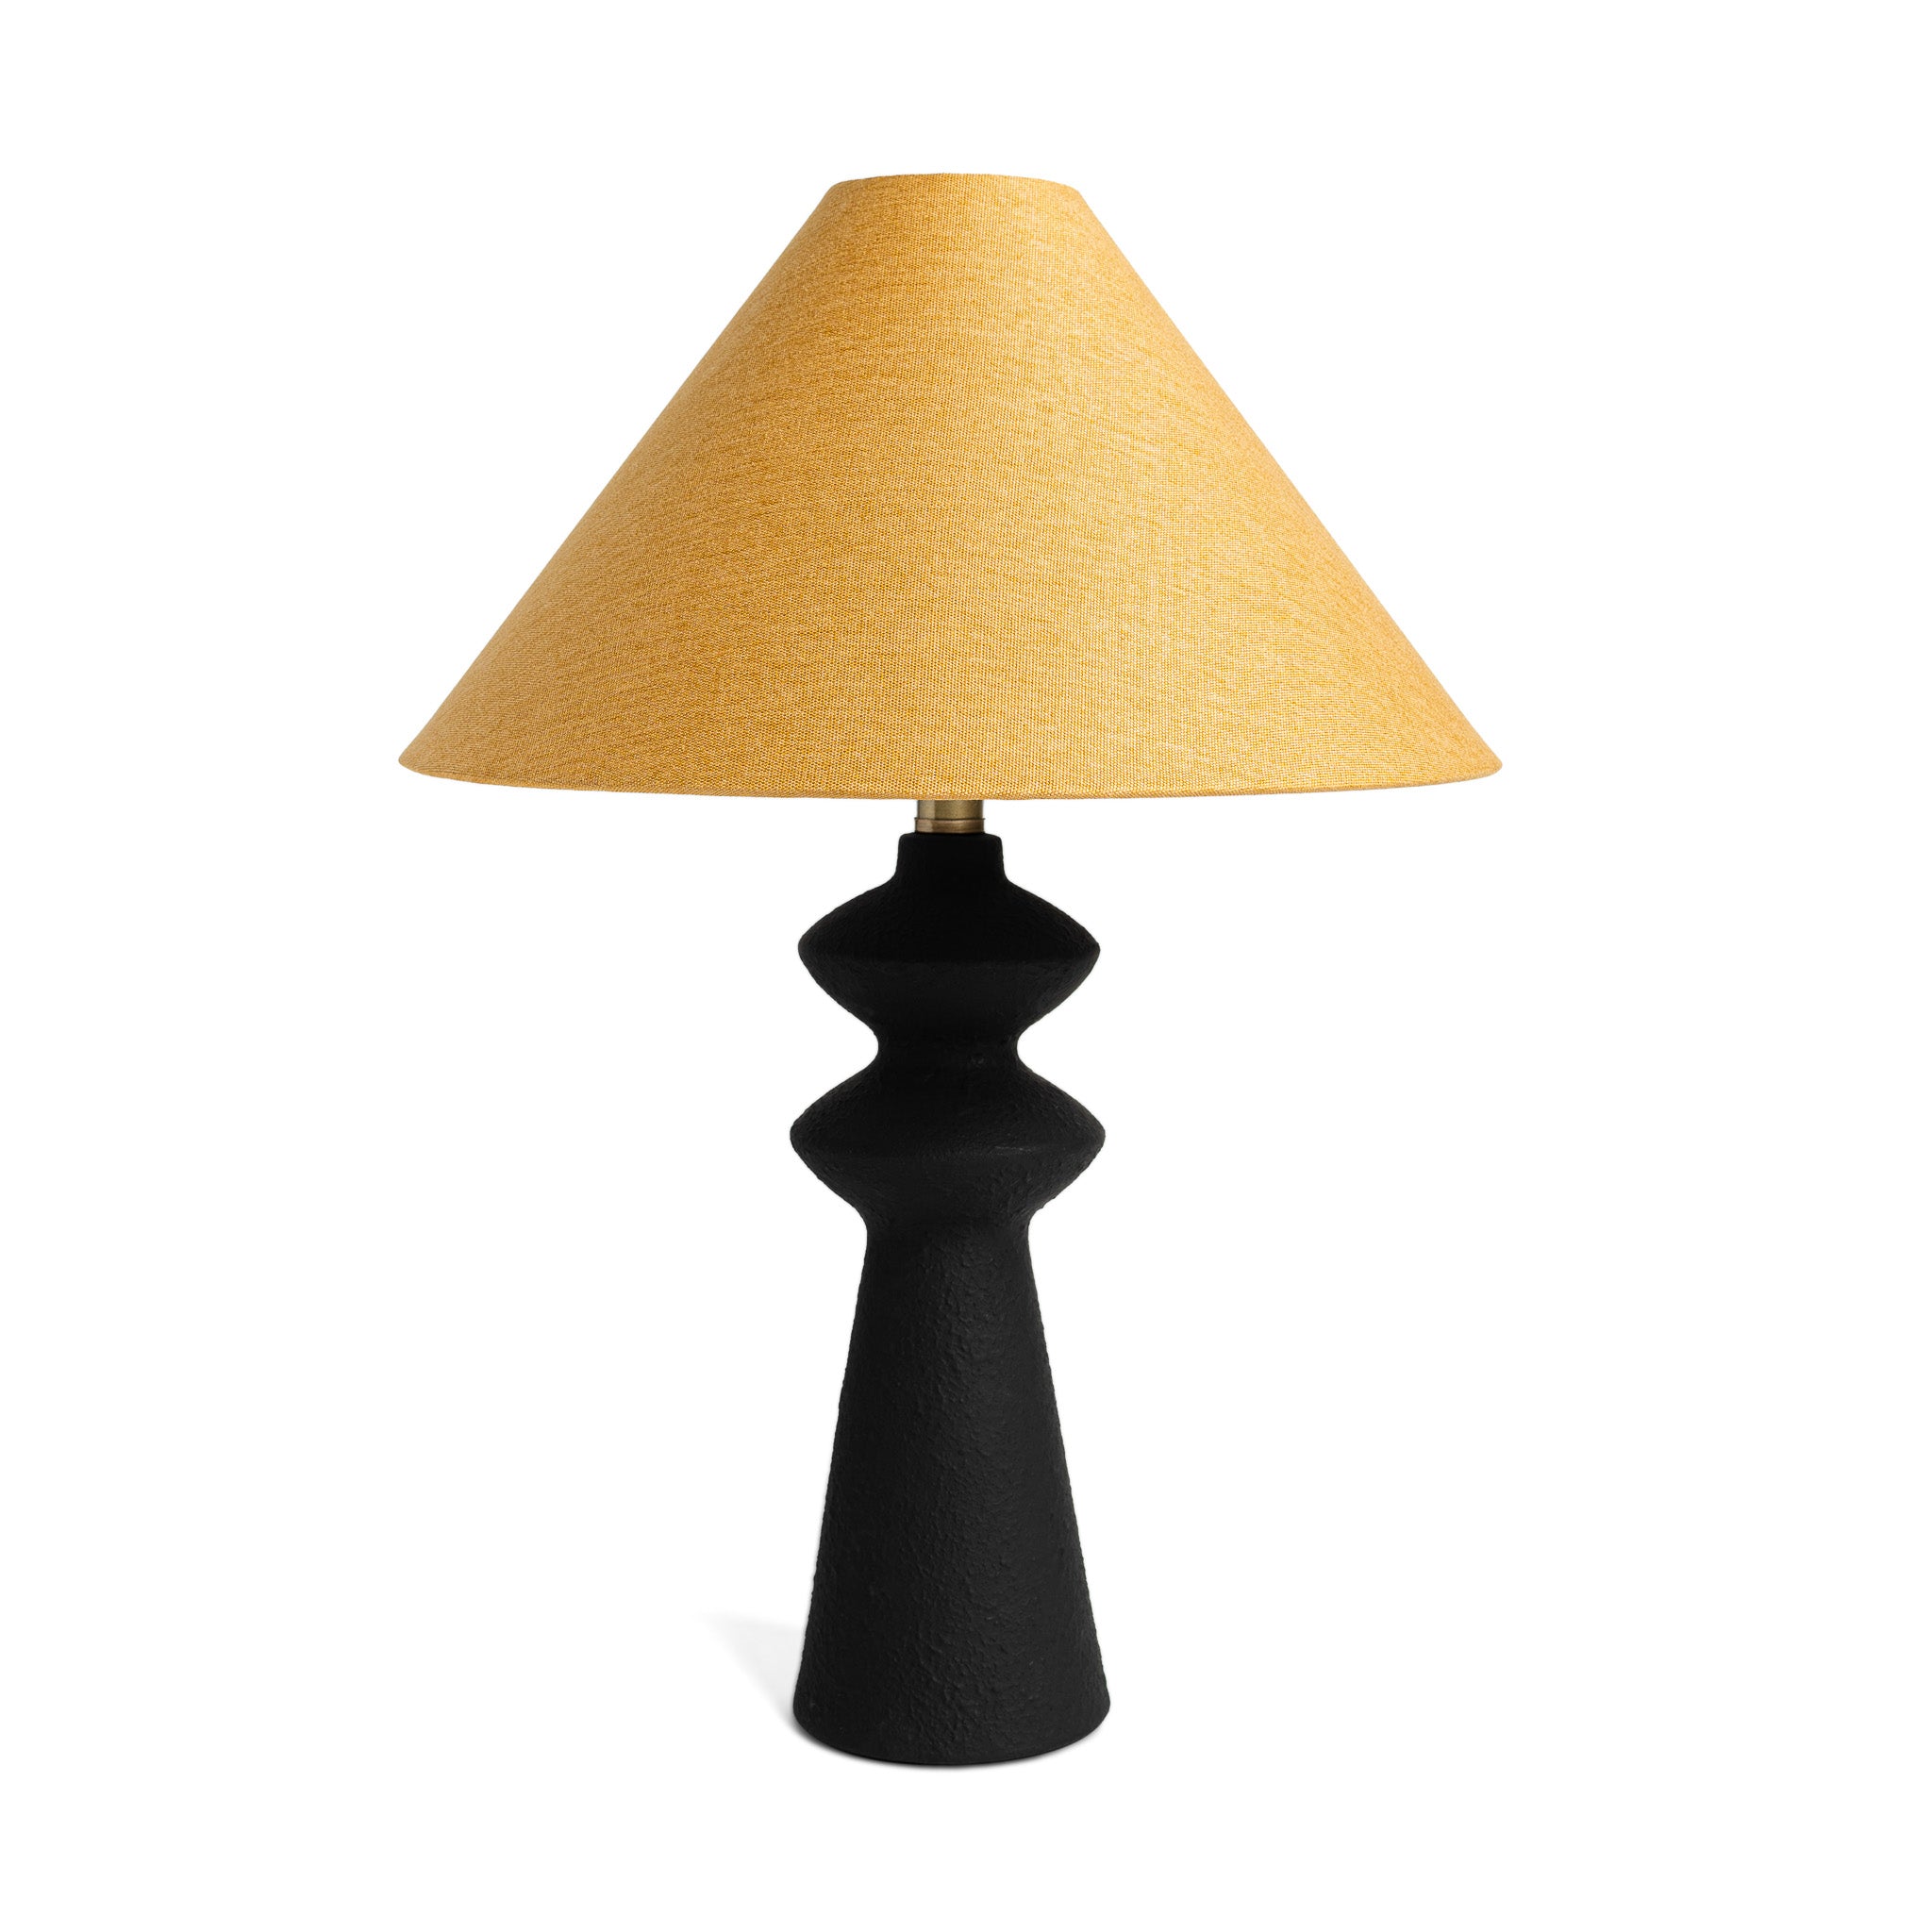 Henrik Table Lamp in Black in Lighting by Maven Lane